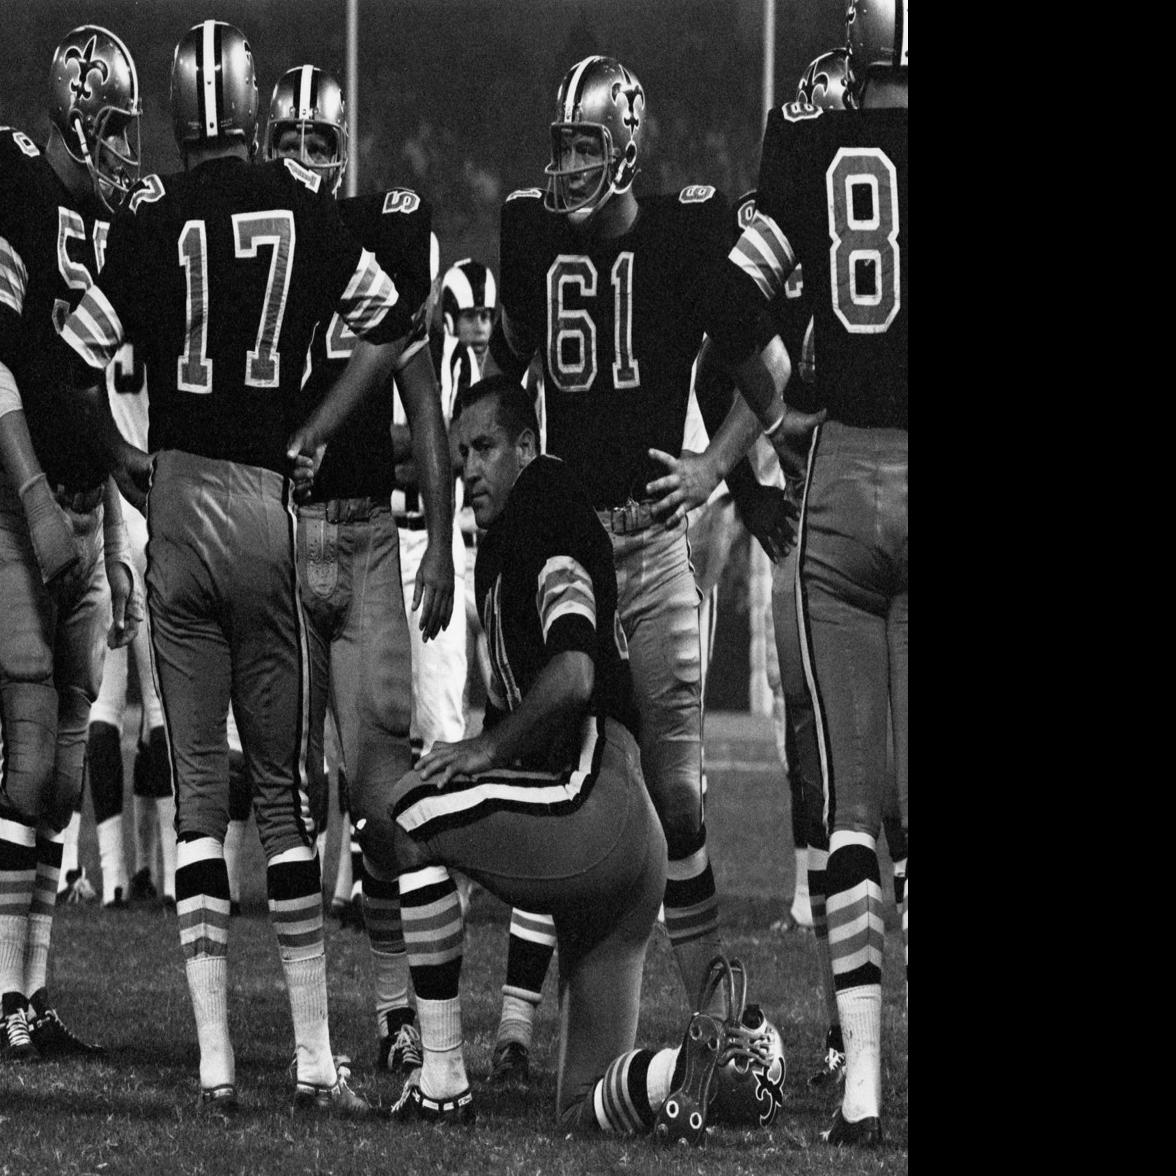 Saints Rams-1967, Billy Kilmer Under Pressure